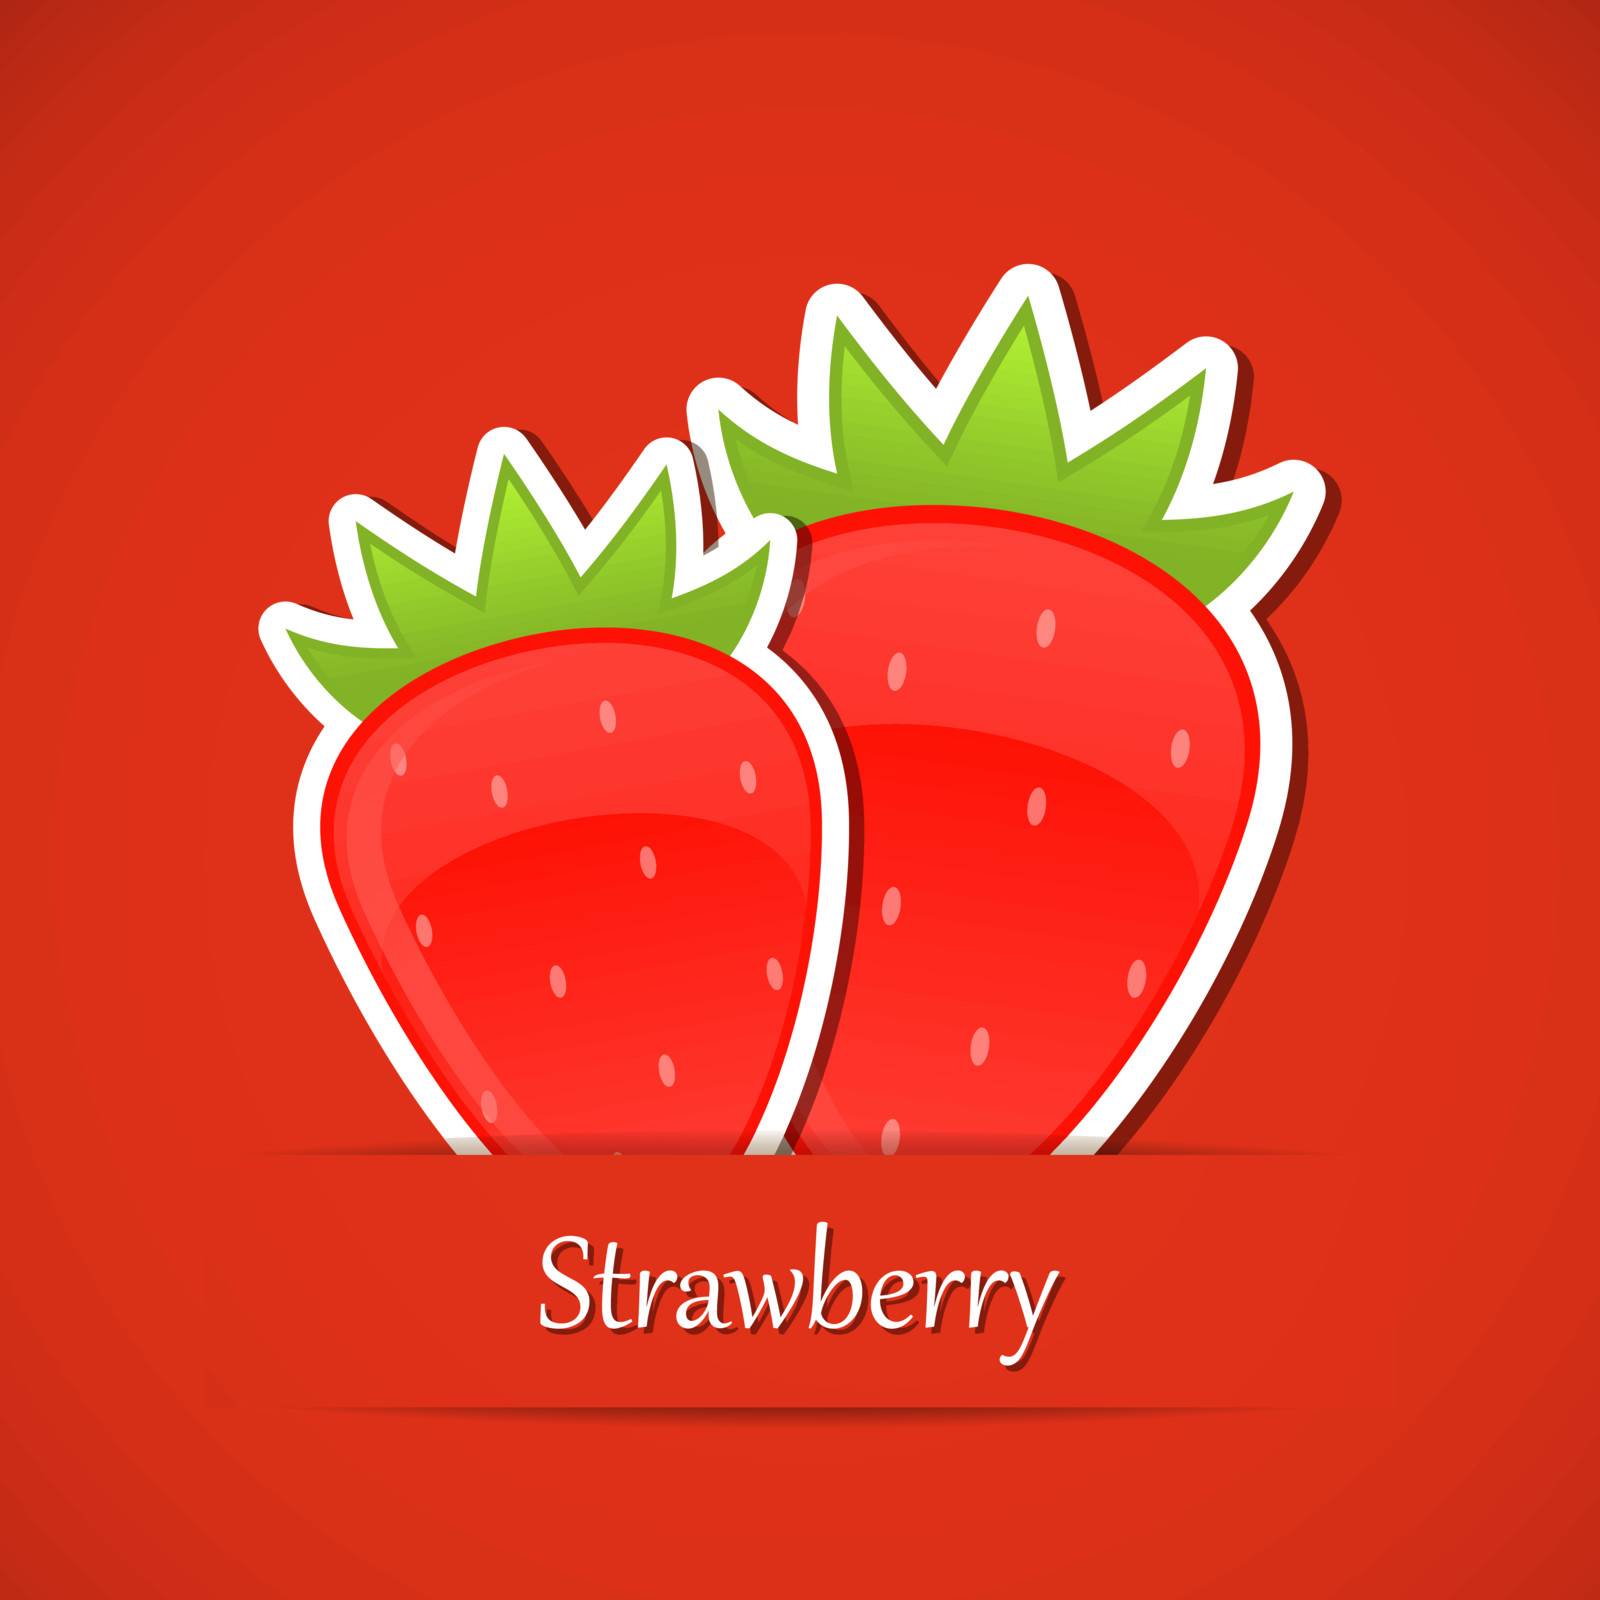 Berry label by bellenixe